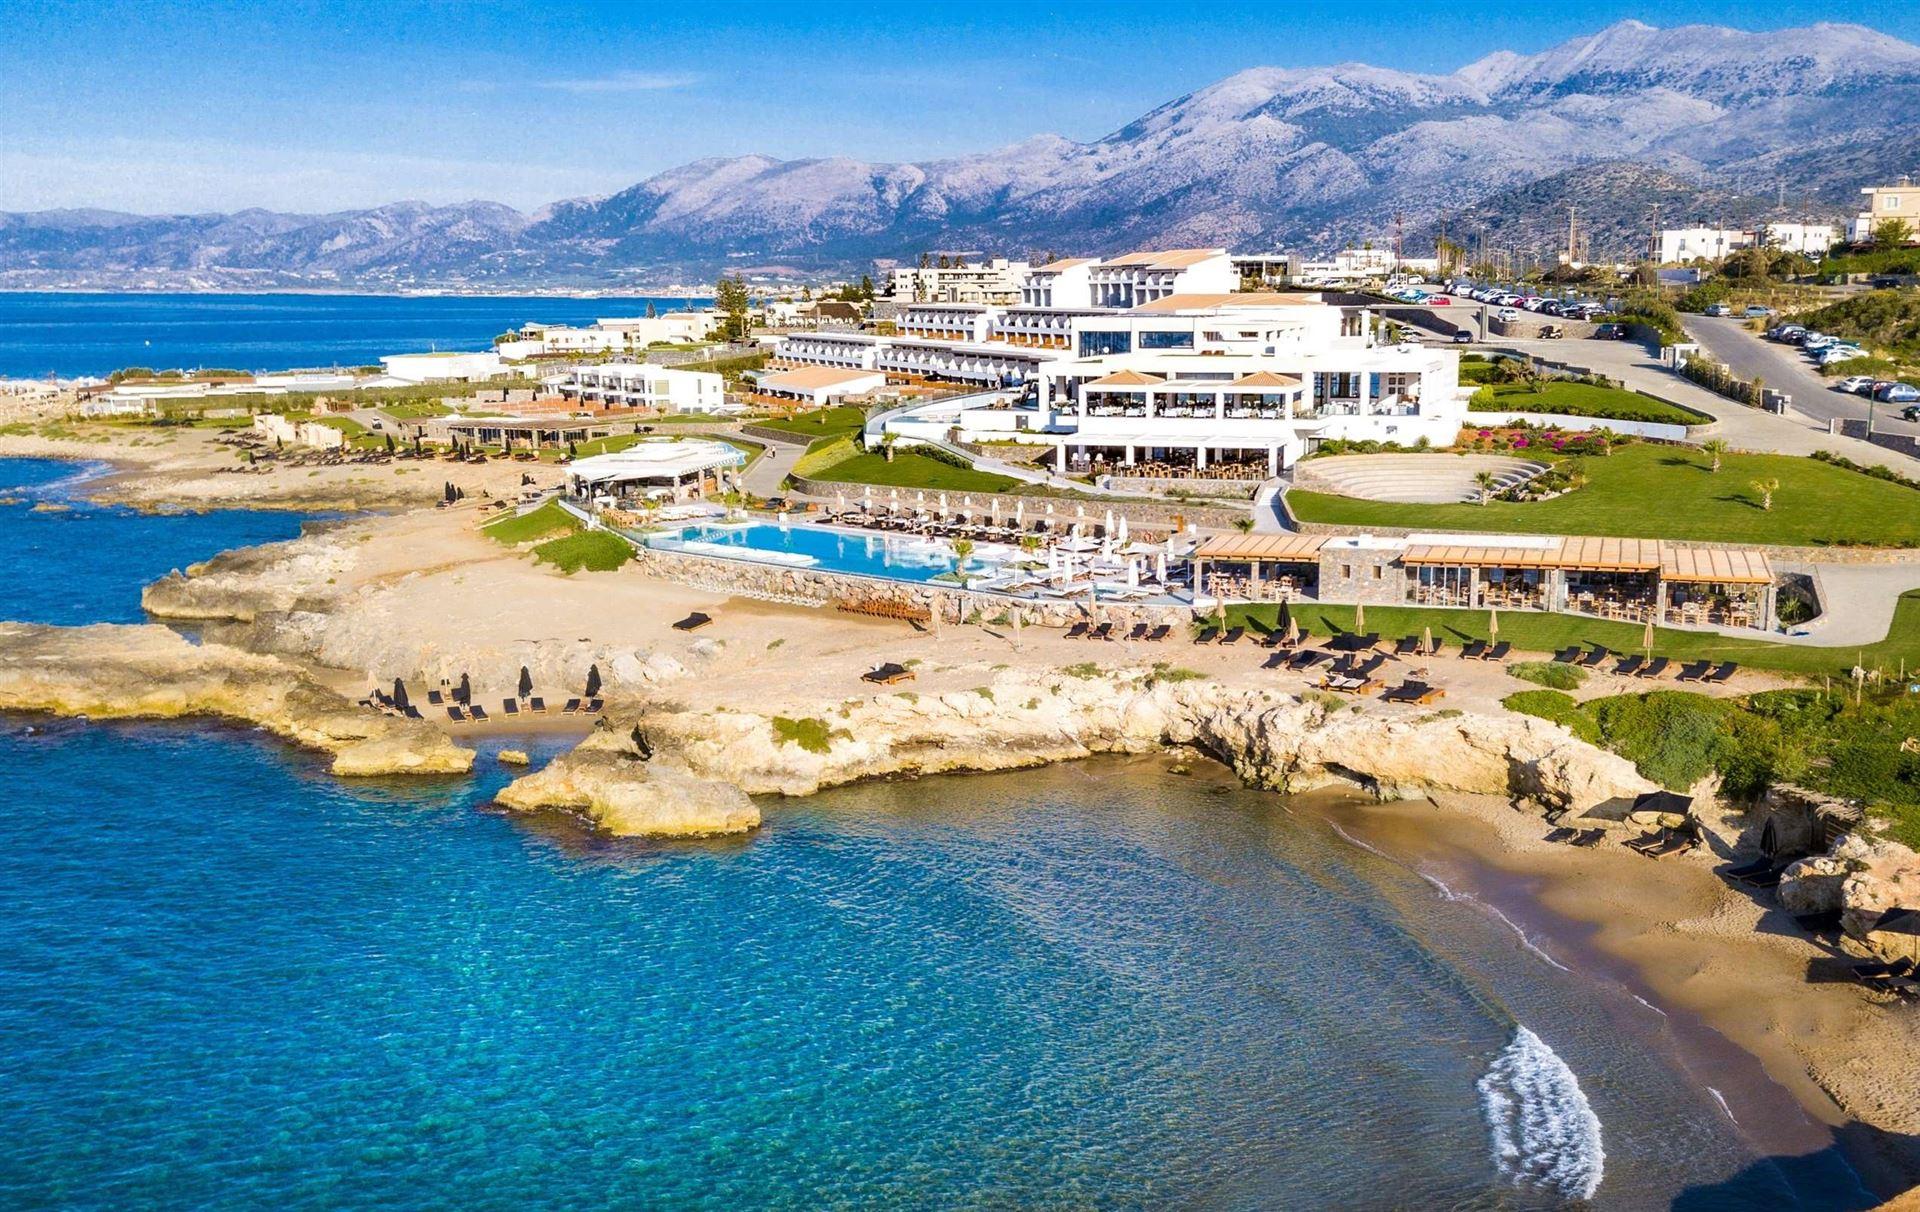 Abaton Island Resort & Spa luxe hotel deals